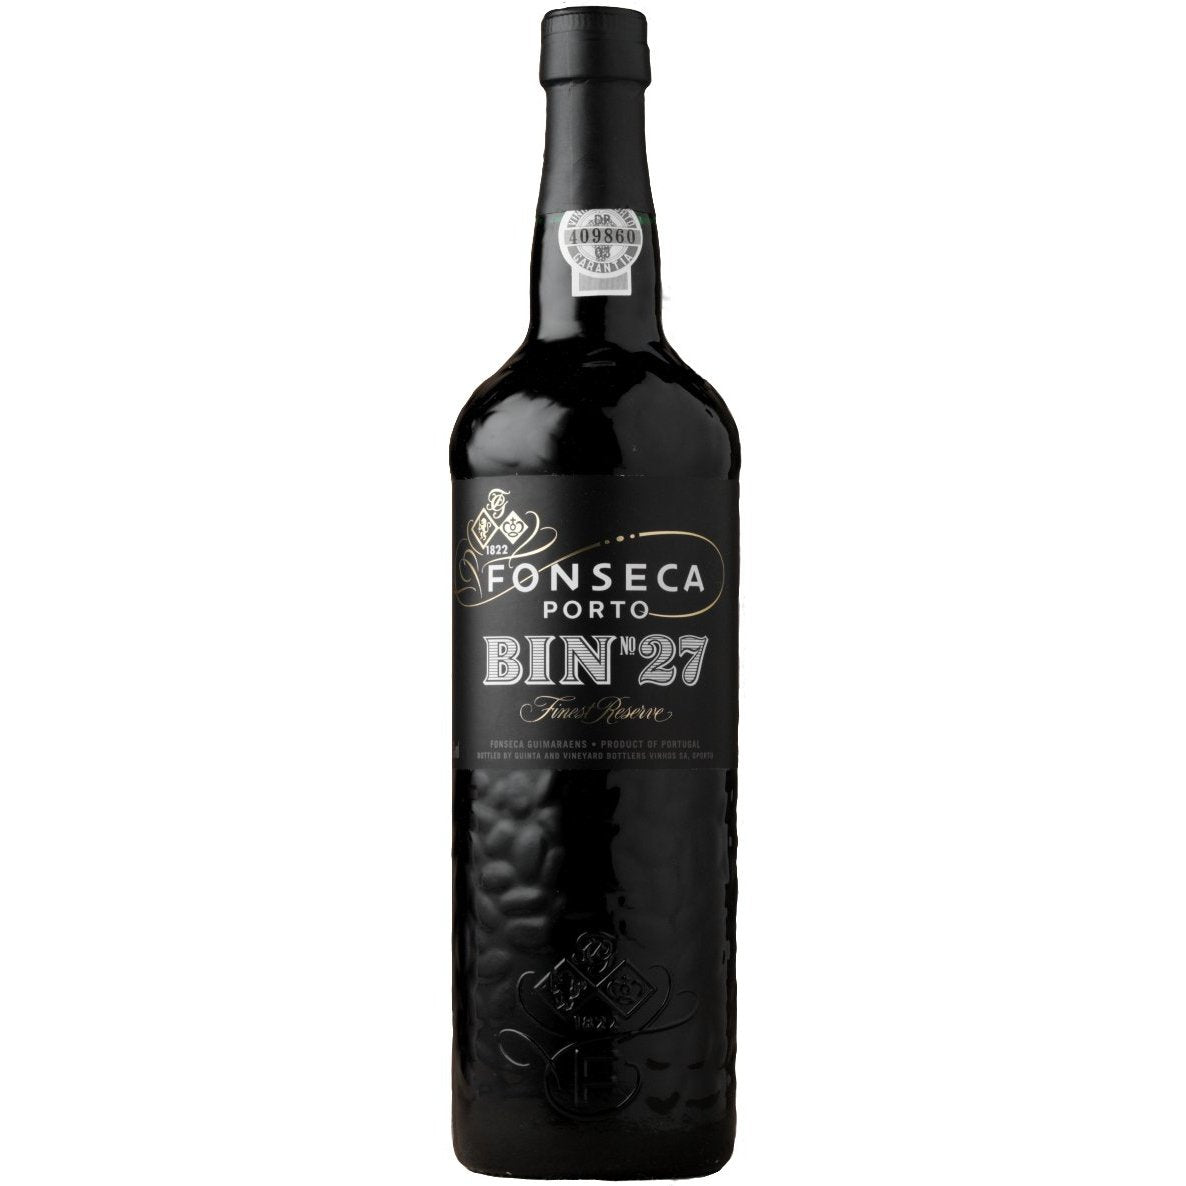 Fonseca Bin 27 Reserve Port-Port-5013521100451-Fountainhall Wines